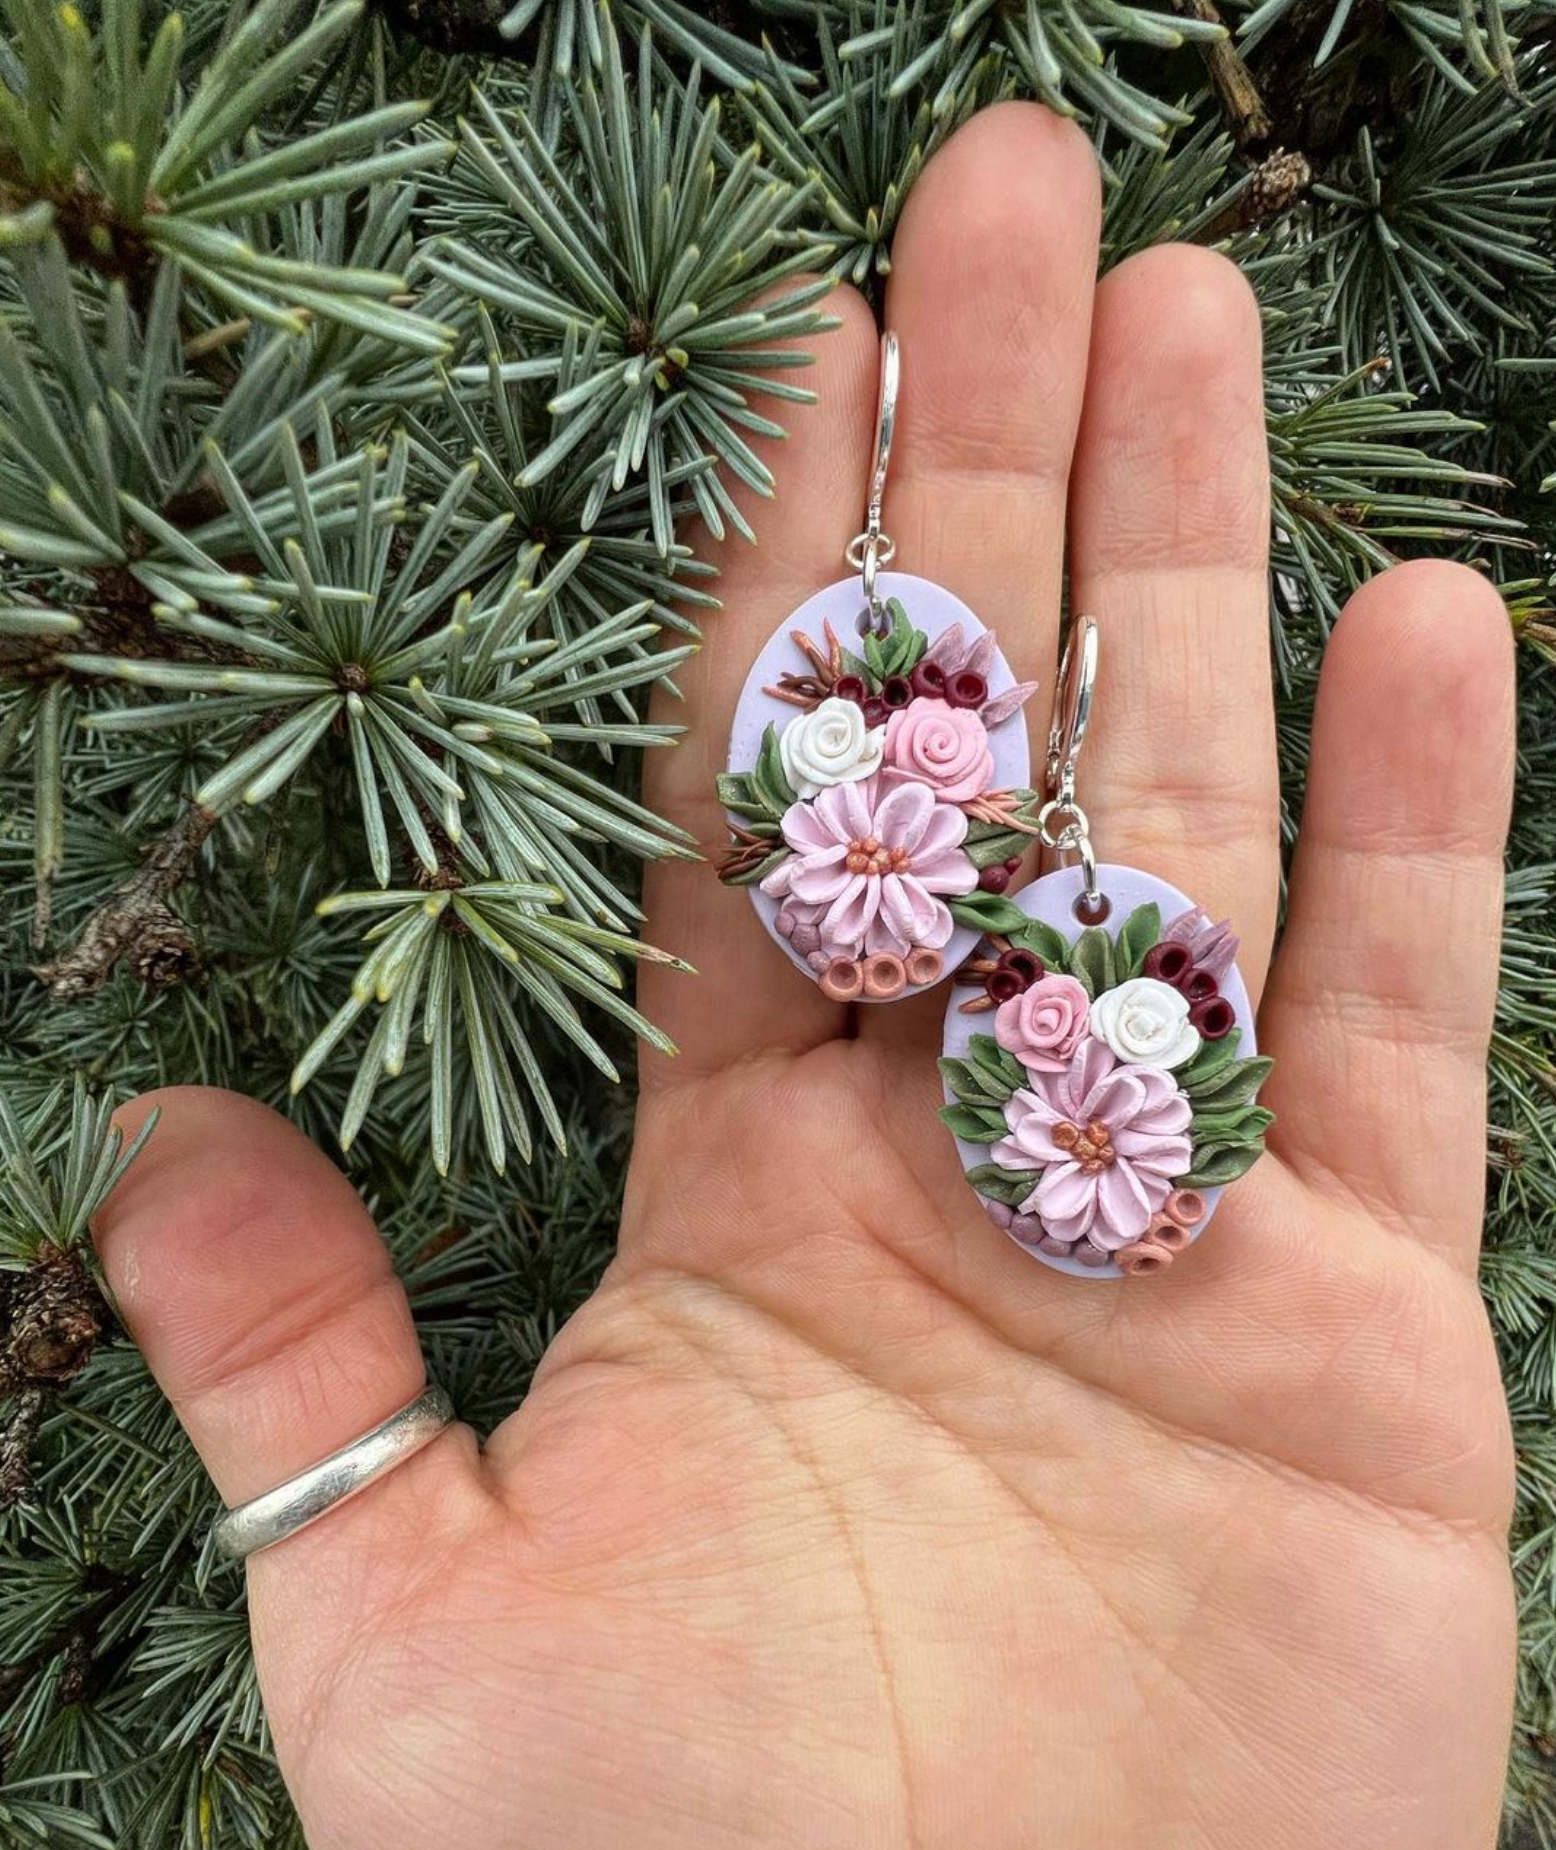 Pink and purple flower earrings